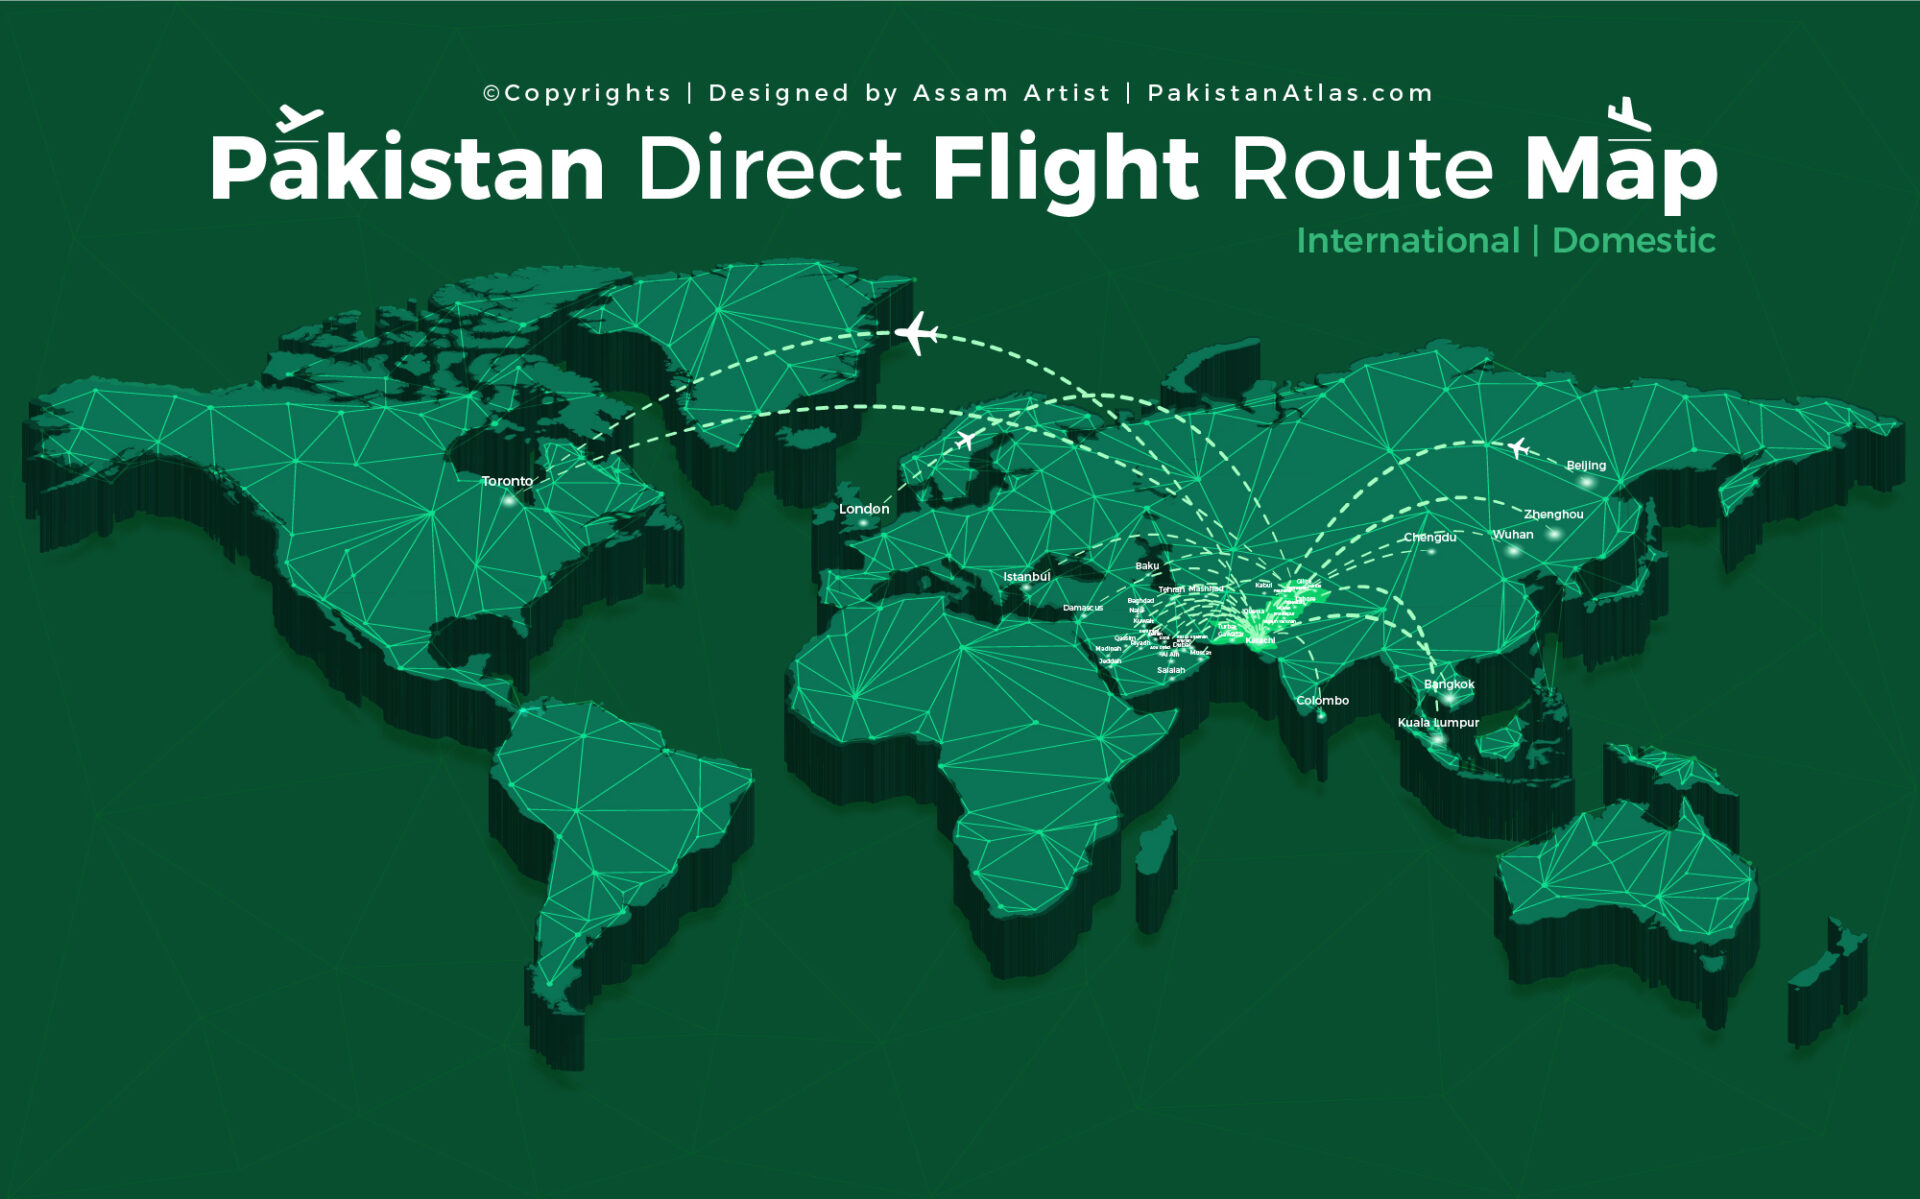 paksitan flight route map by assam artist